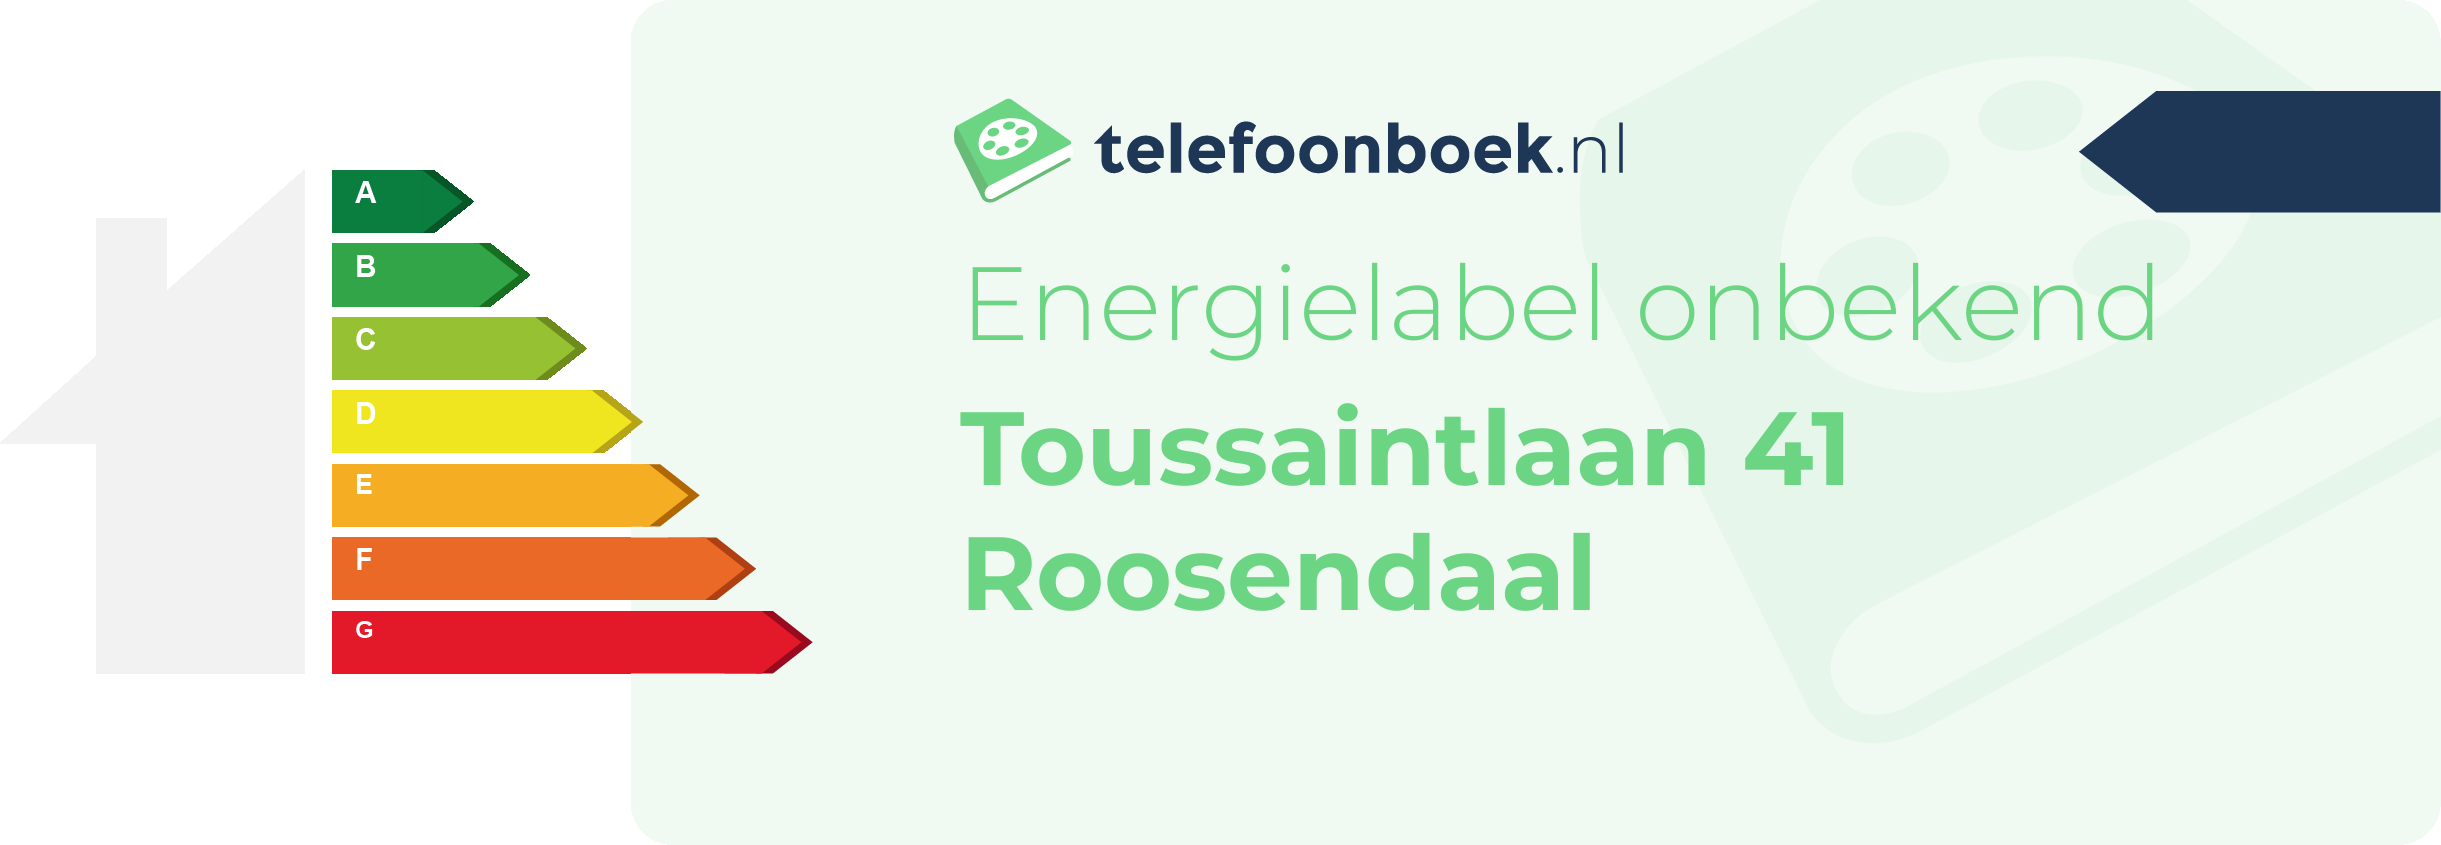 Energielabel Toussaintlaan 41 Roosendaal